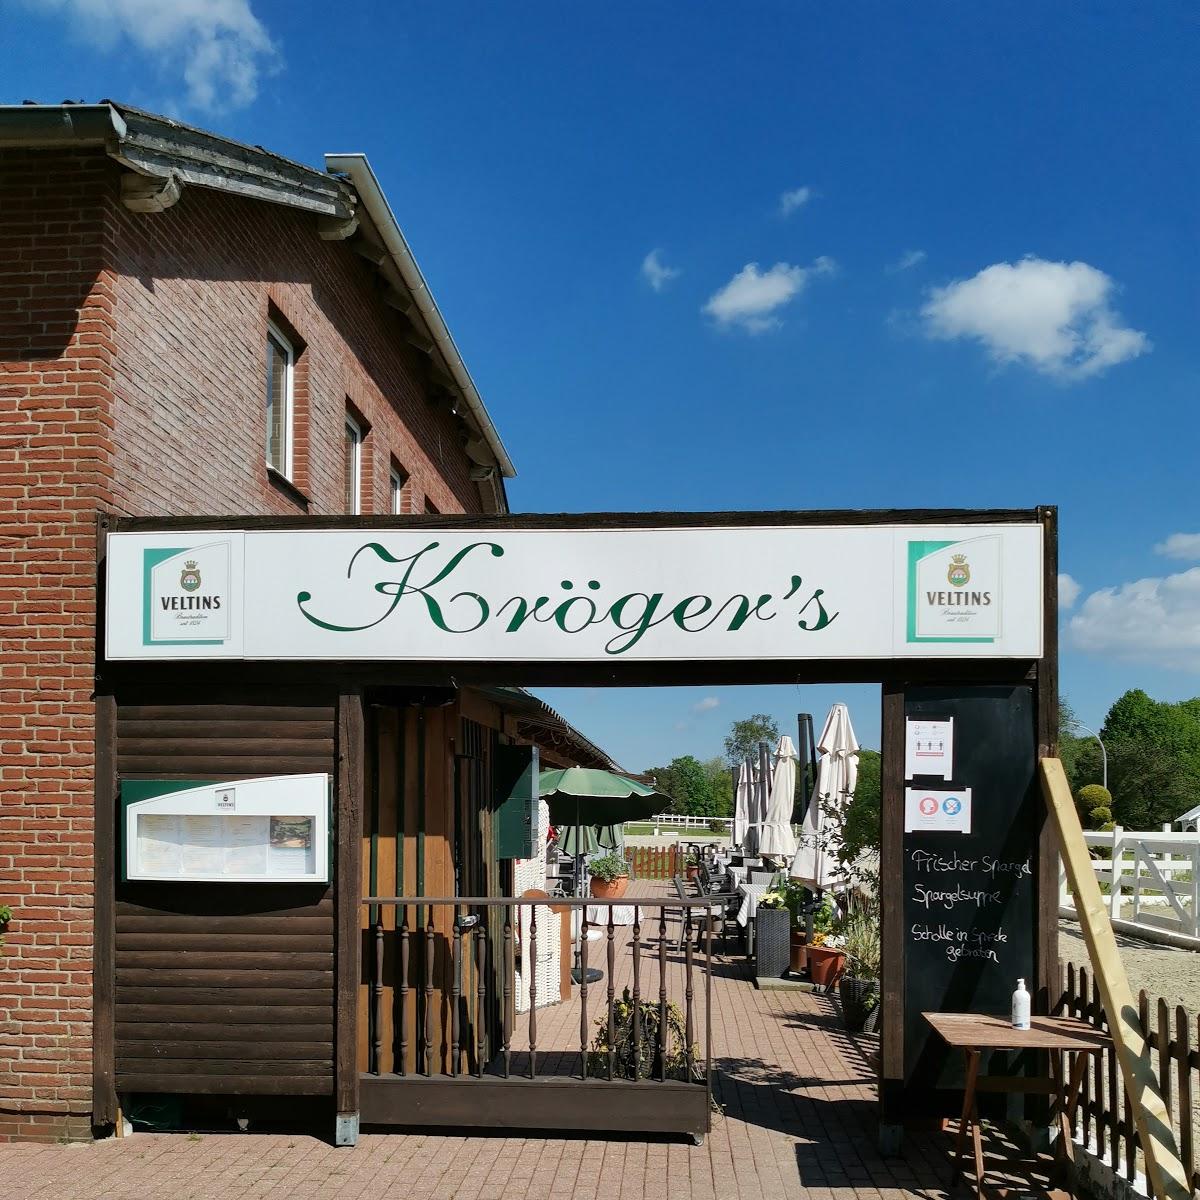 Restaurant "Kröger